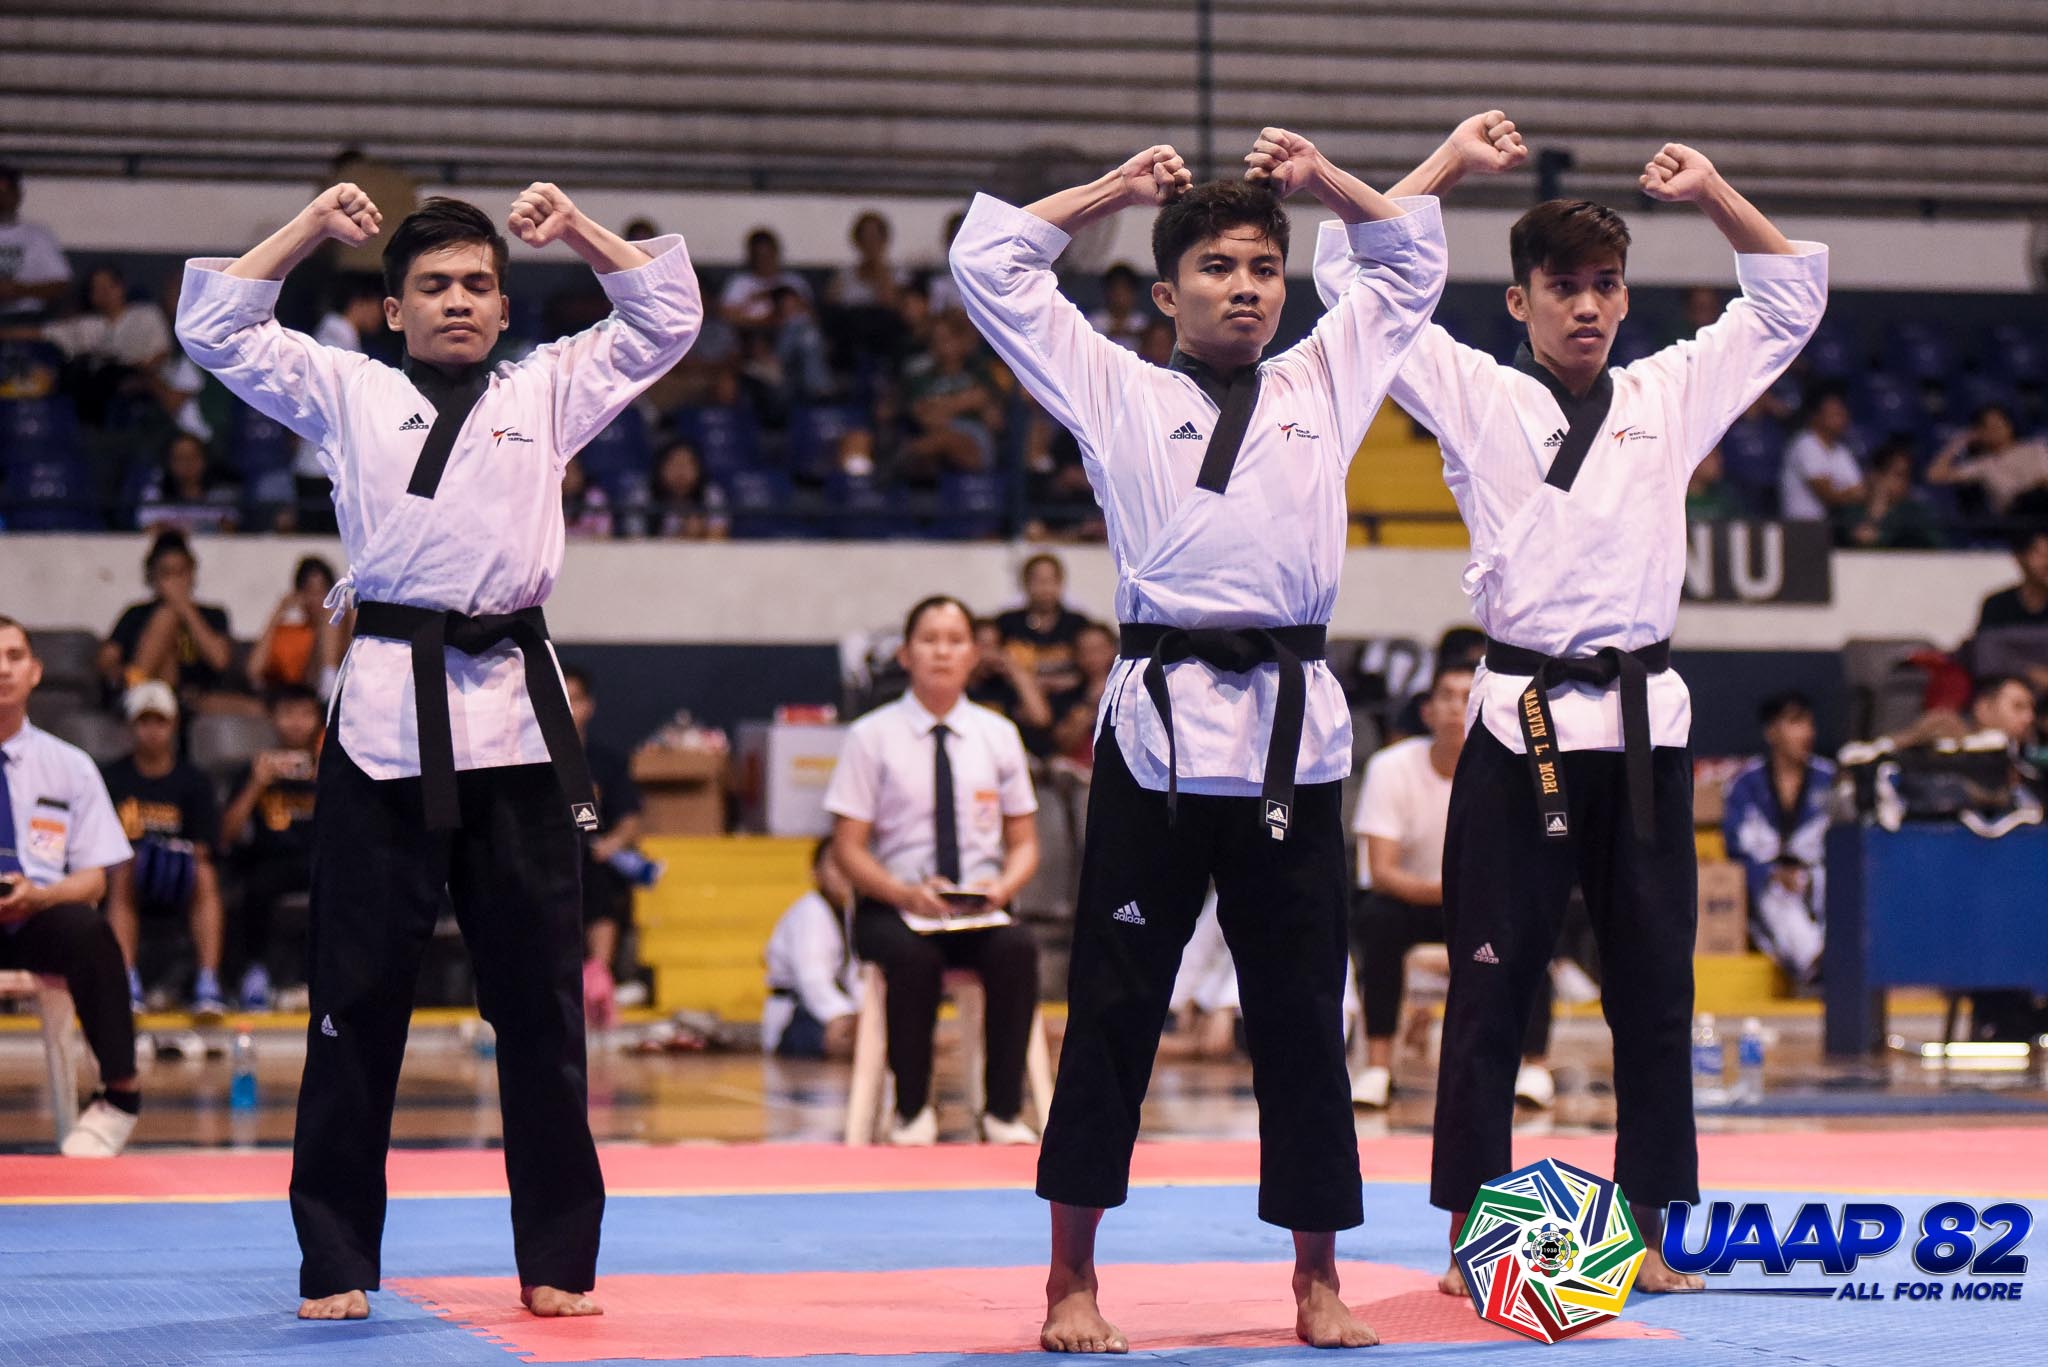 UAAP82-POOMSAE-TEAM-MALE-5TH-PHOTO-NU-KIER-MACALINO-RICCO-TERAYTAY-MARVIN-MORI Angelica Gaw gifts La Salle back-to-back UAAP Poomsae titles ADMU DLSU FEU News NU Taekwondo UAAP UP UST  - philippine sports news